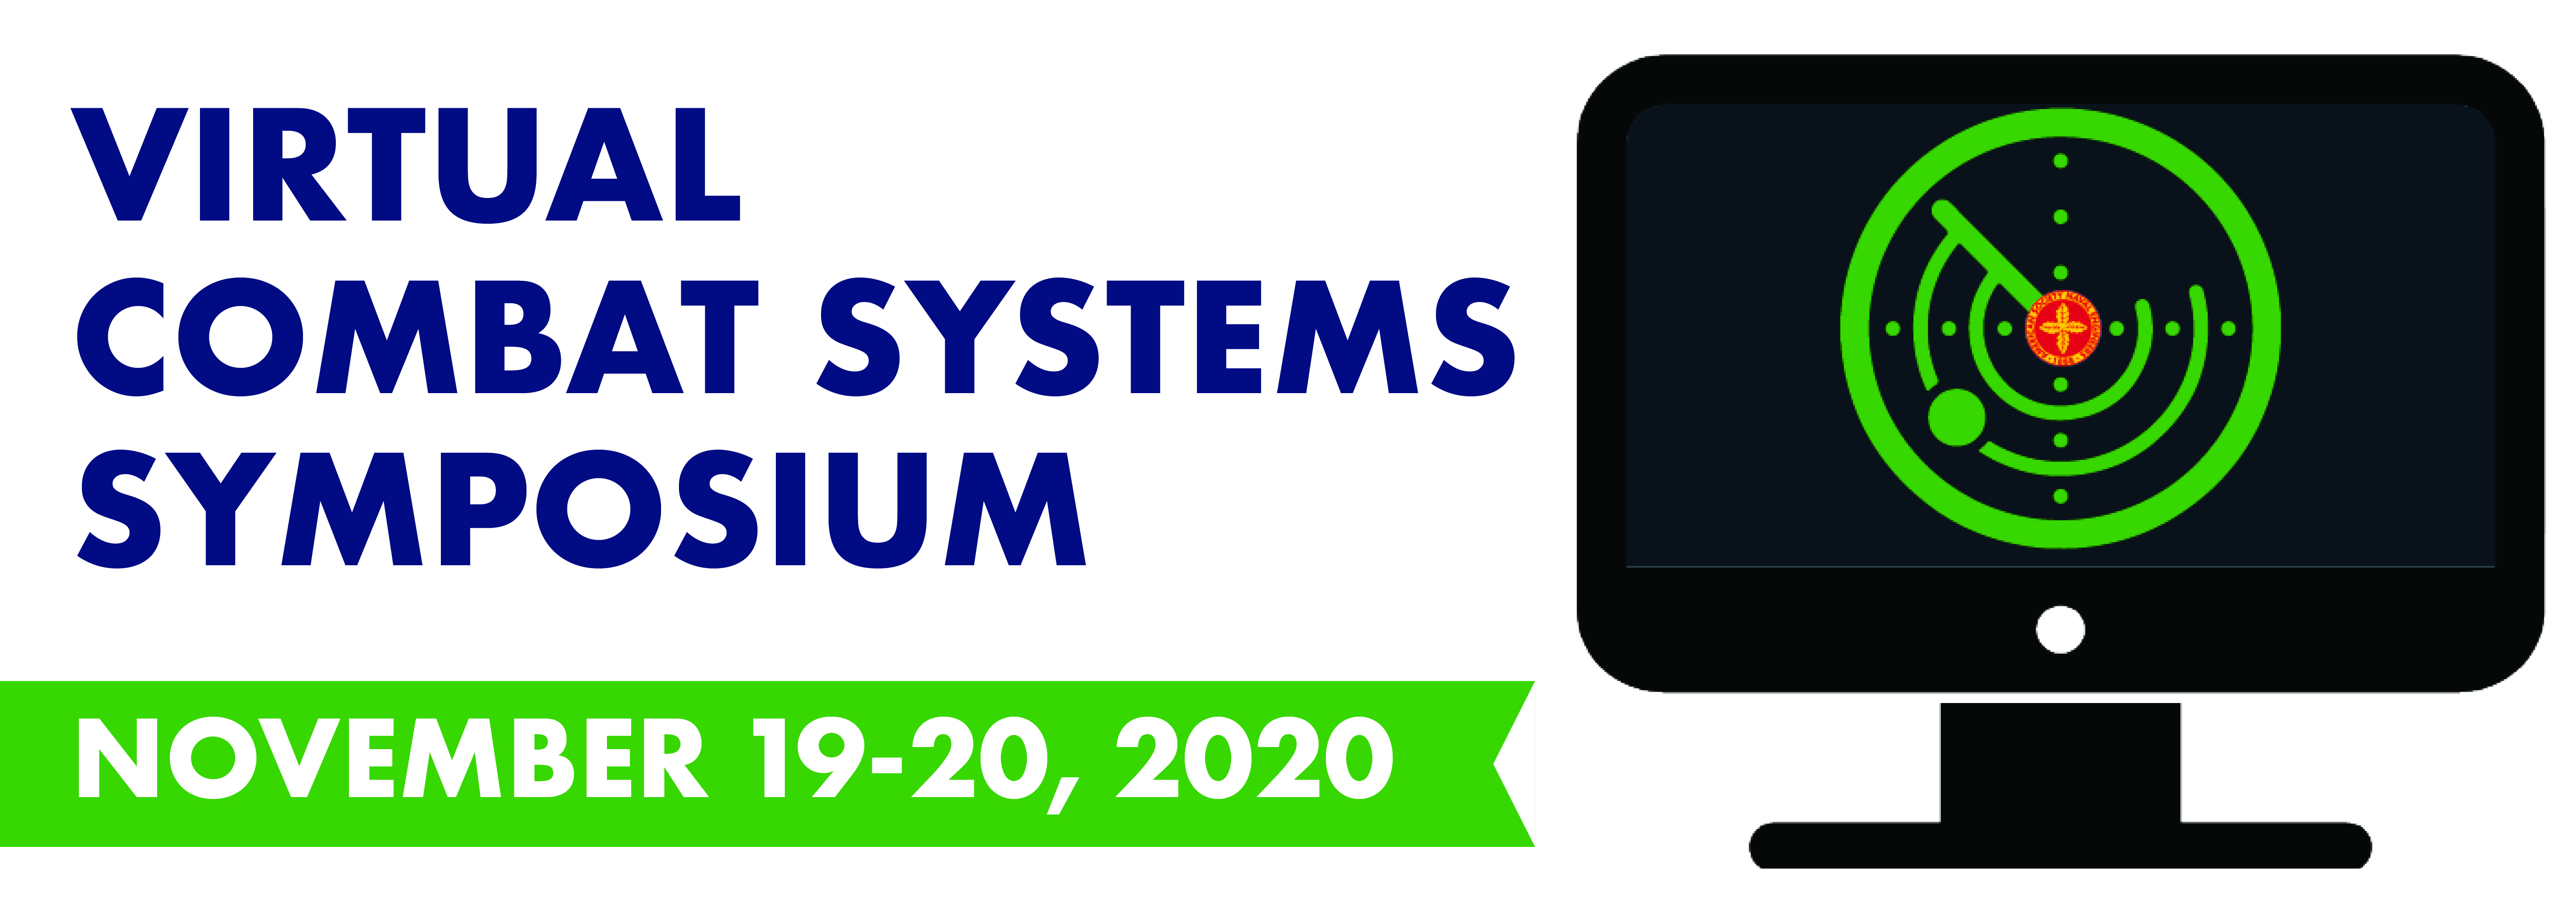 VirtualCombatSystemsSymposium2020